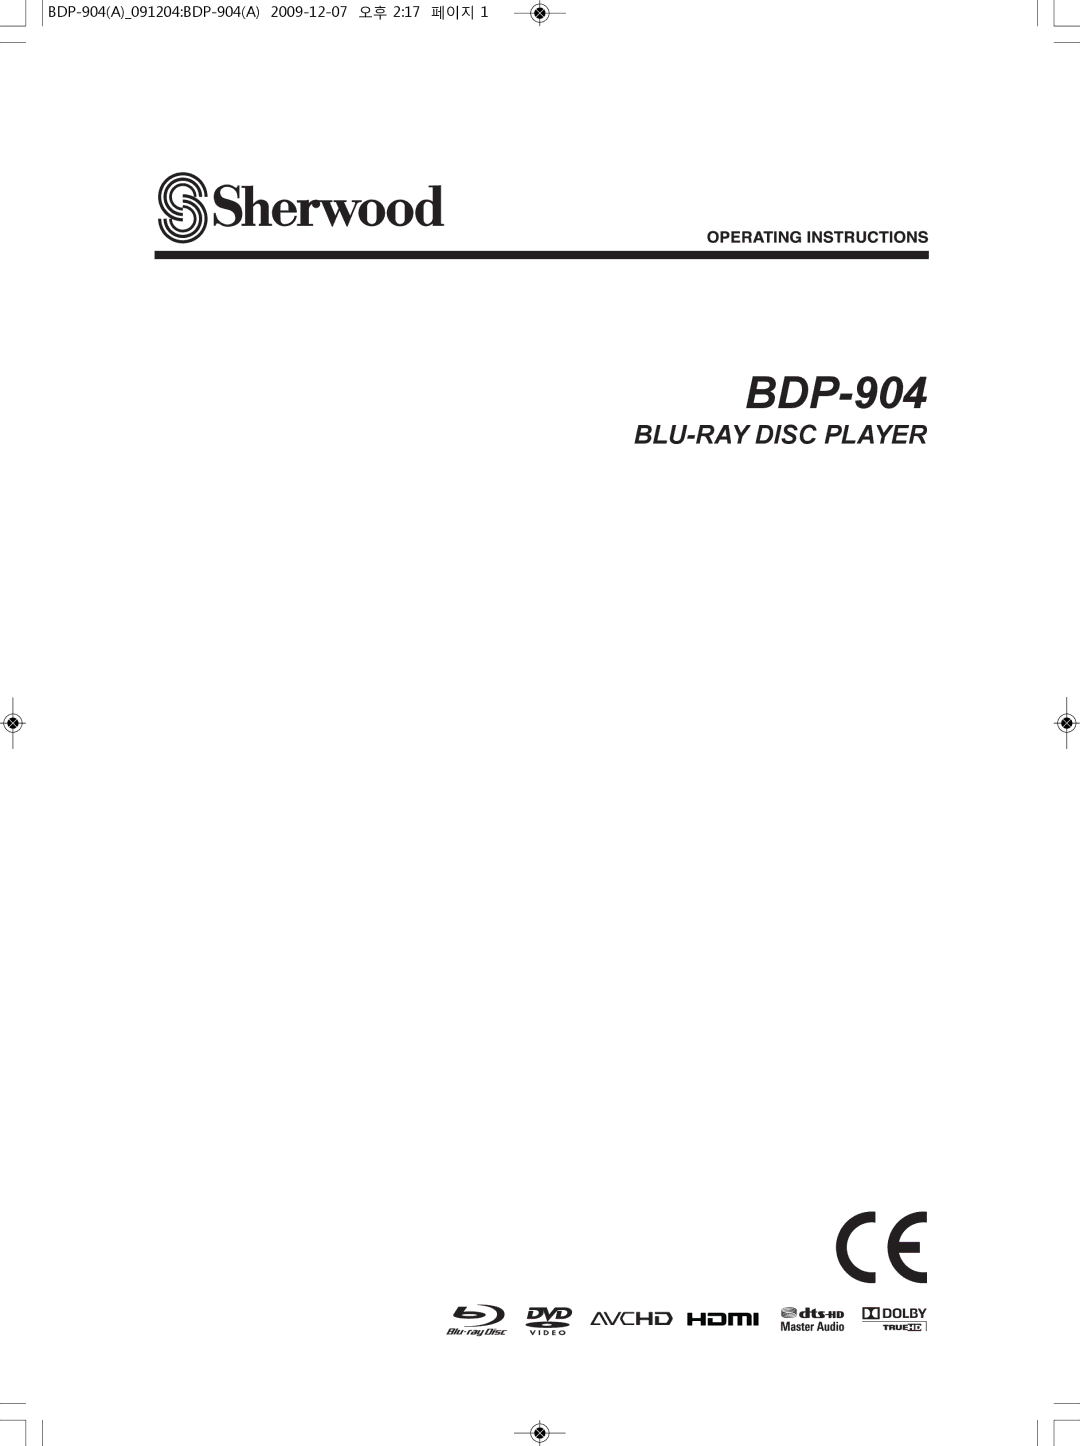 Sherwood BDP-904 manual 